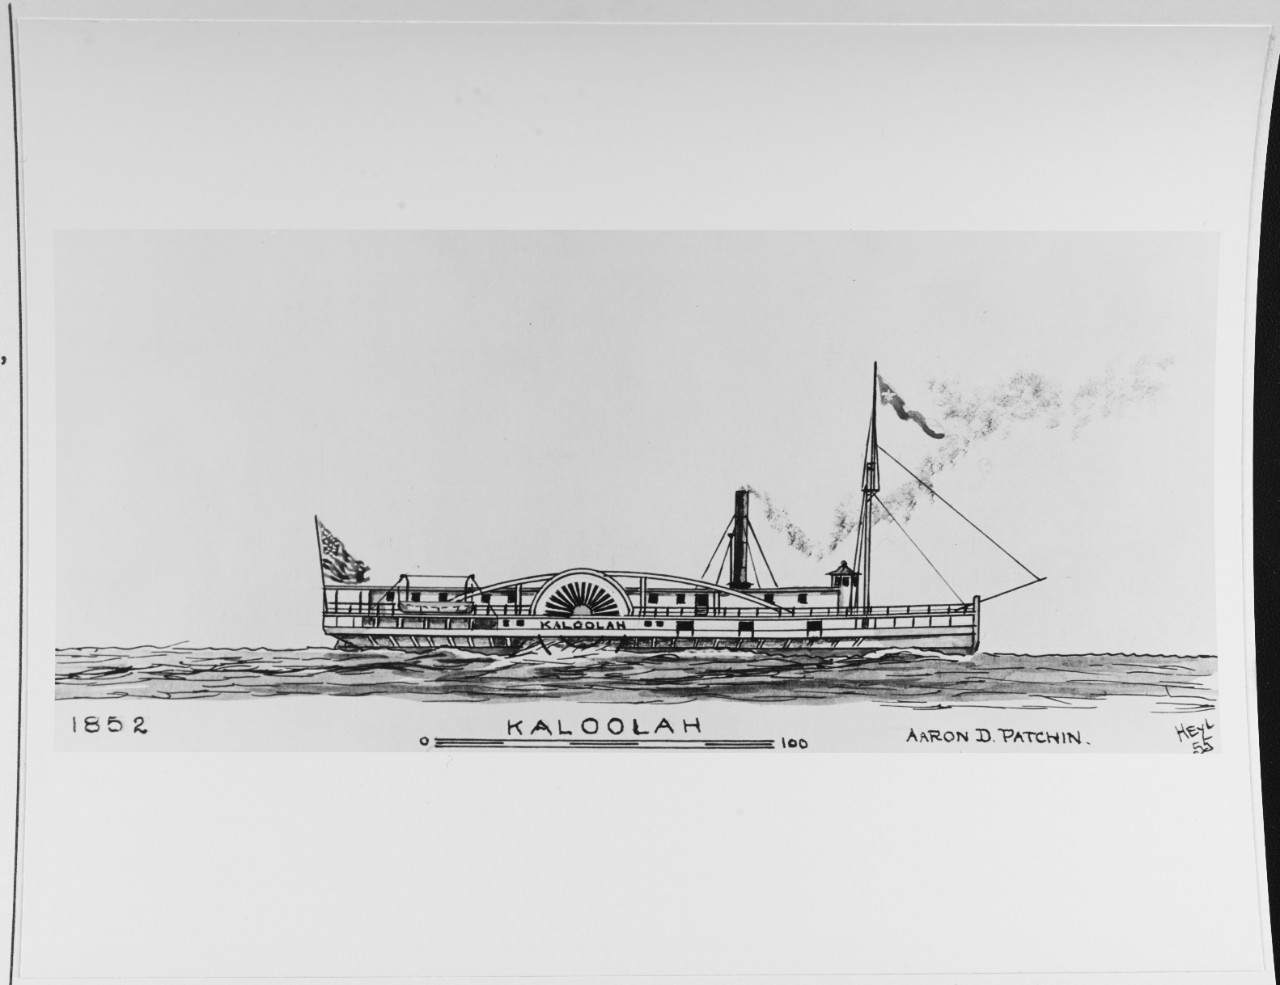 KALOOLAH (American-Canadian merchant steamer, 1852-62)